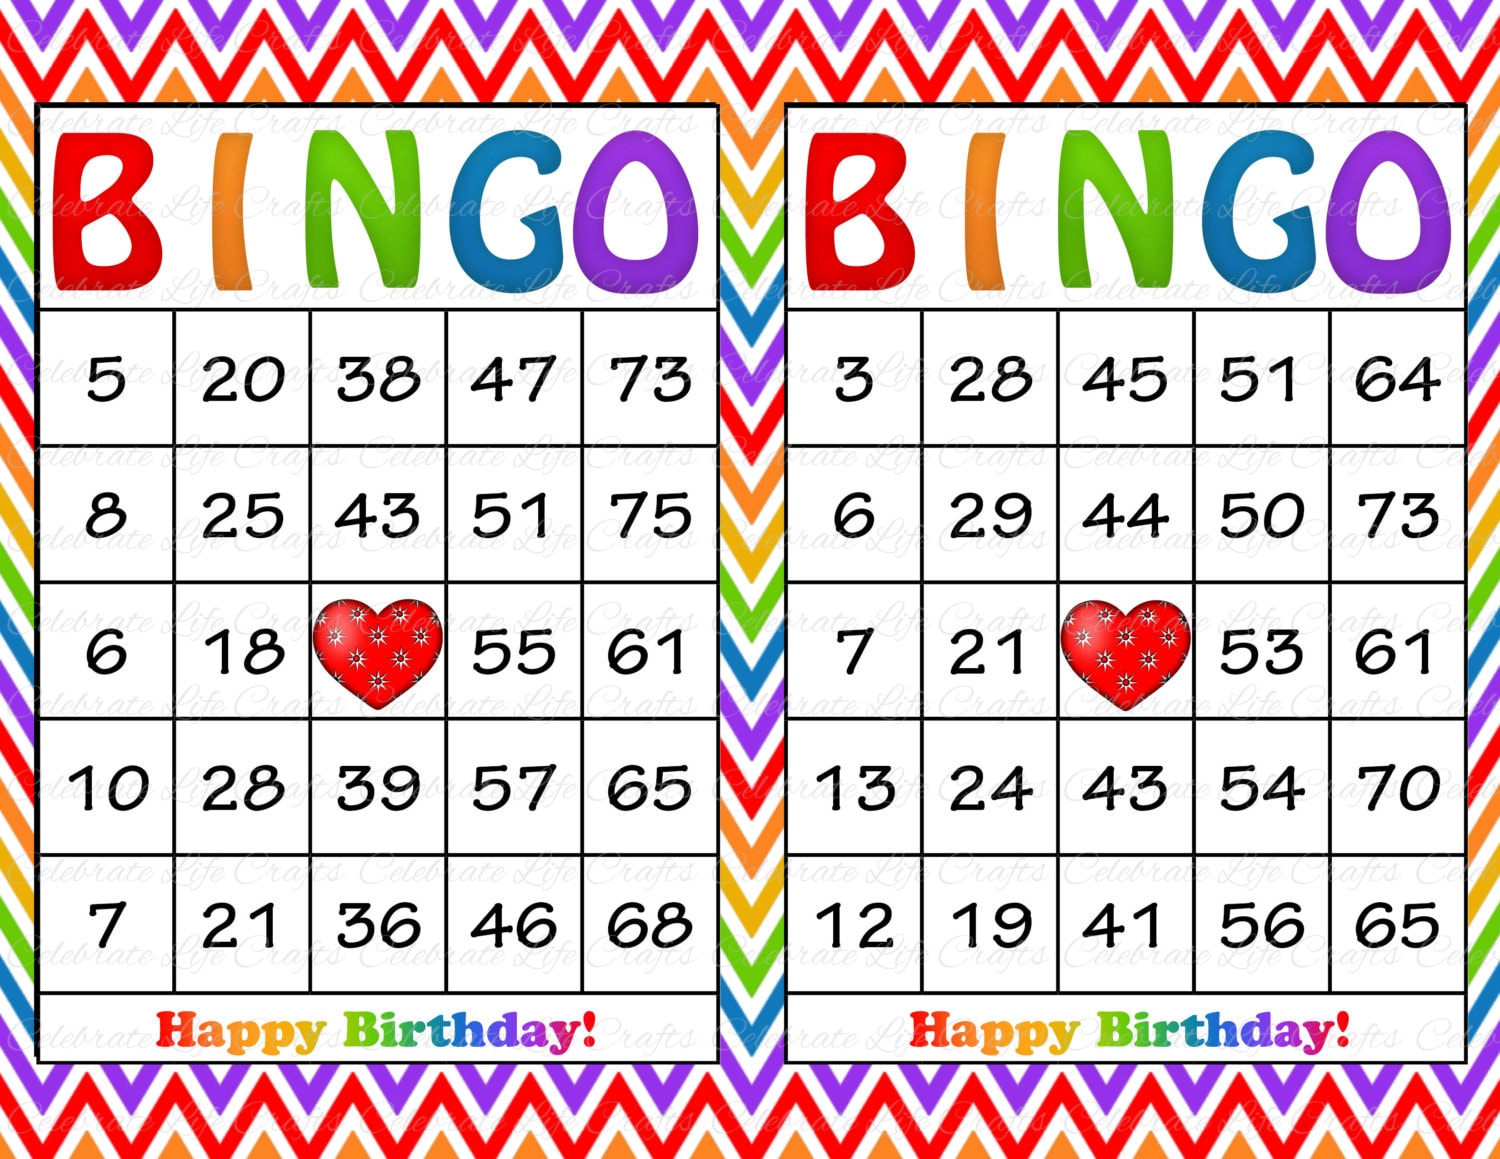 Free Printable Birthday Cards Of Bingo